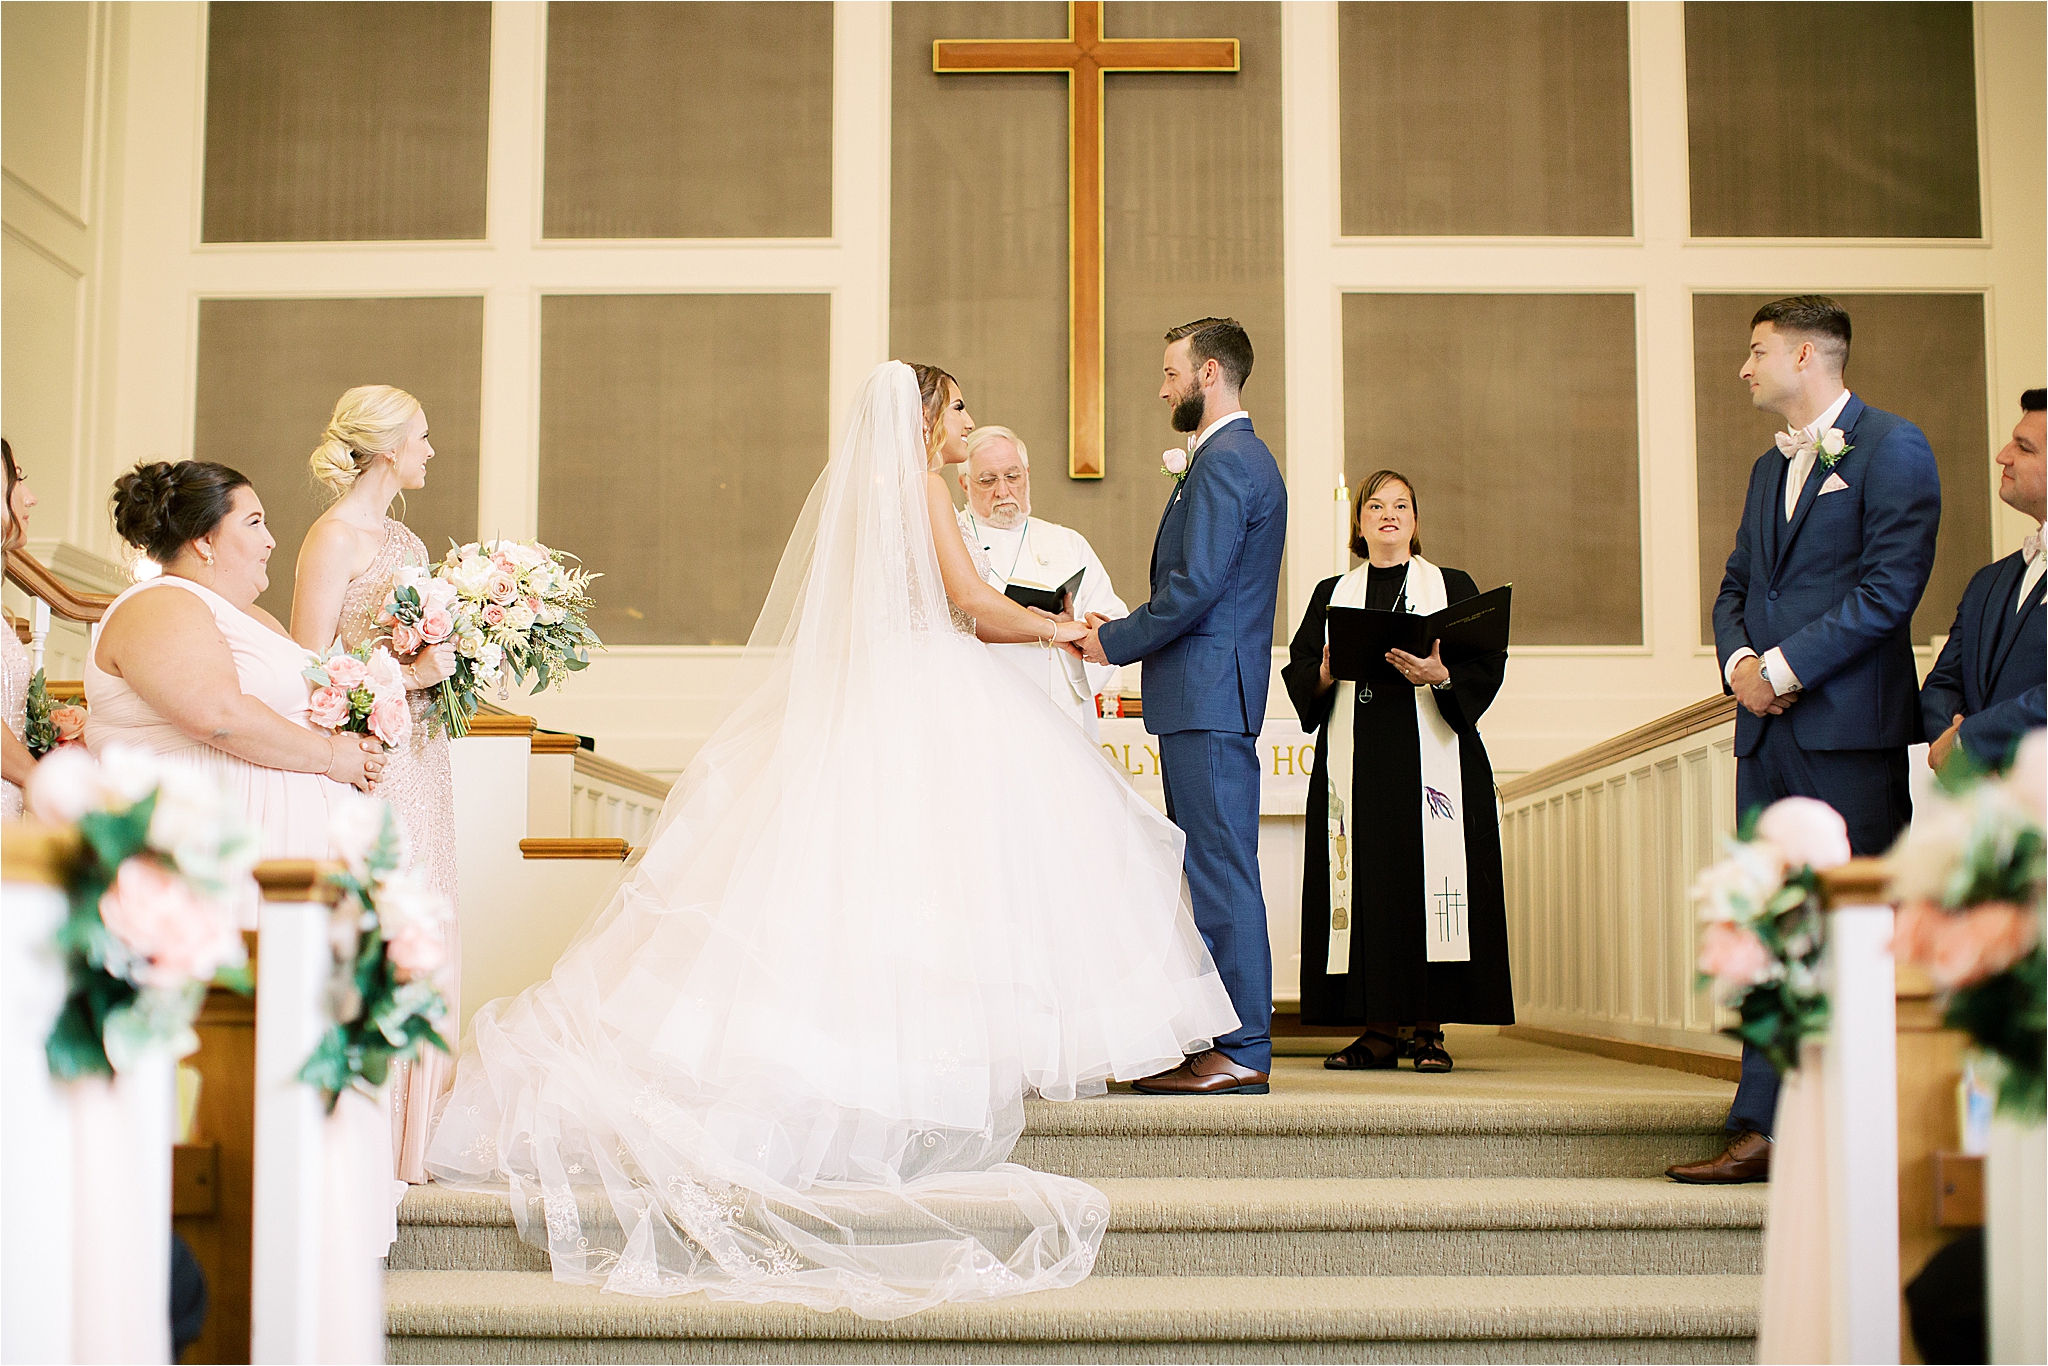 Olmstead Community Church wedding ceremony by Canton wedding Photographers